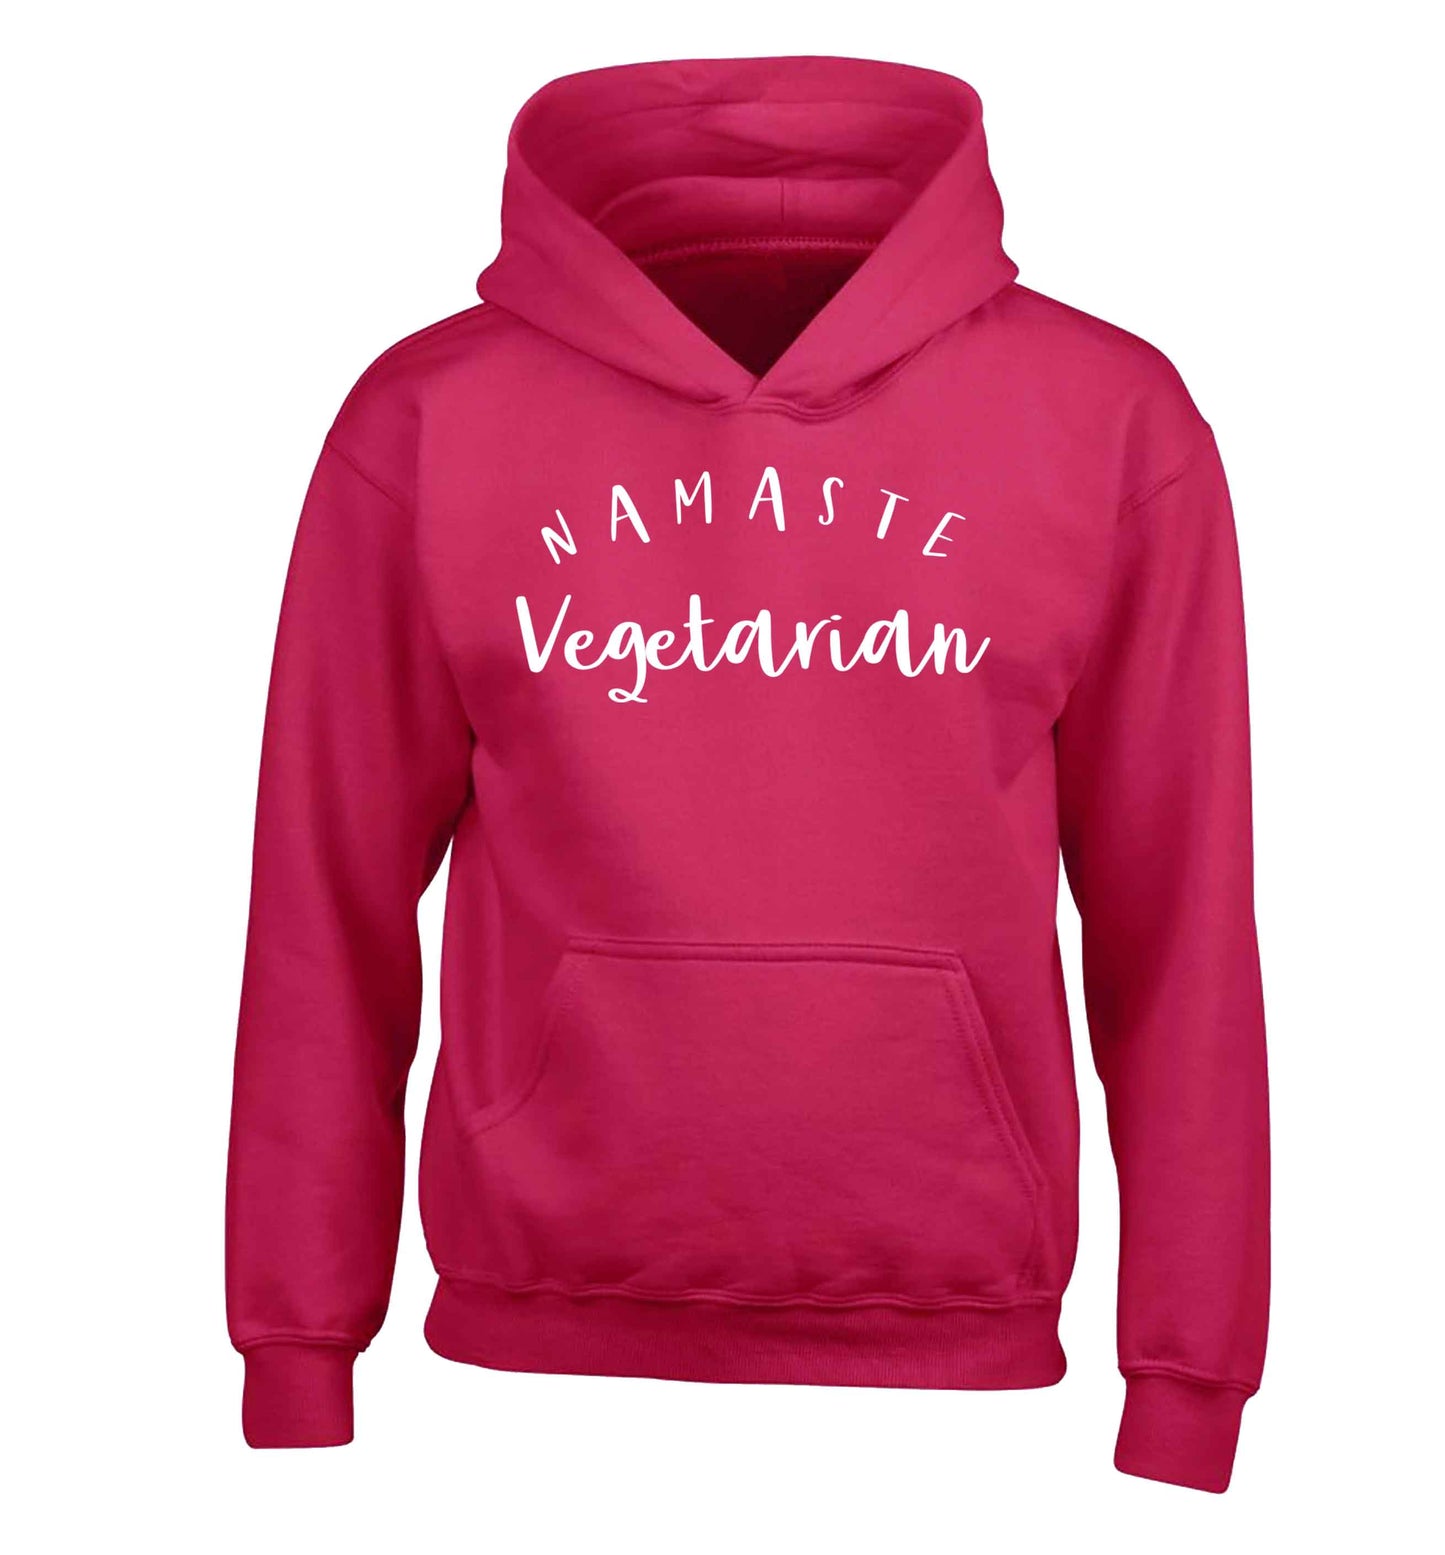 Namaste vegetarian children's pink hoodie 12-13 Years